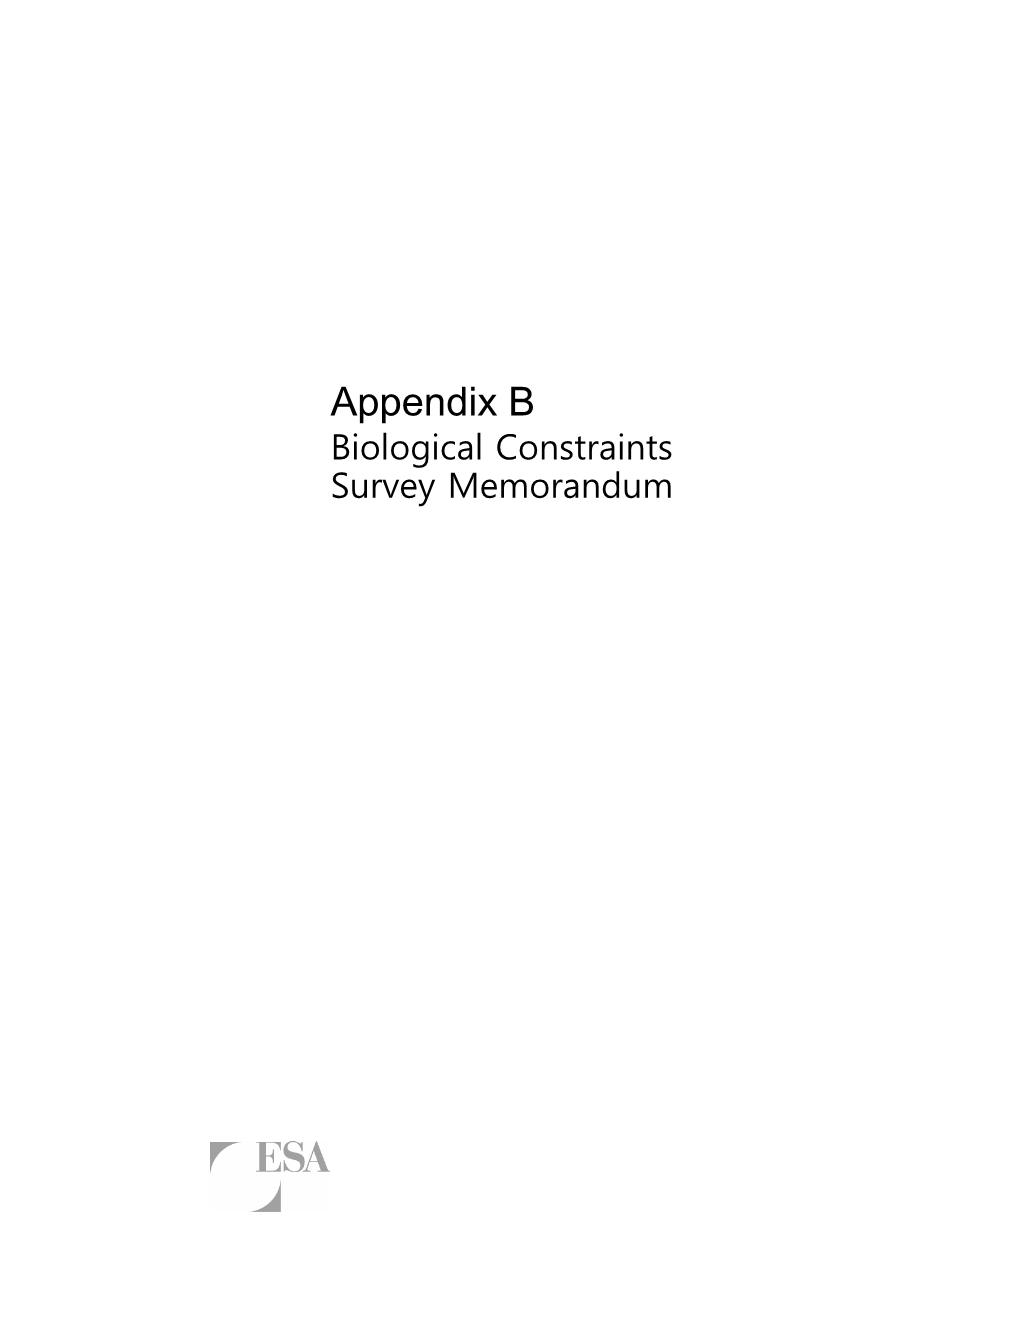 Appendix B: Biological Constraints Survey Memorandum